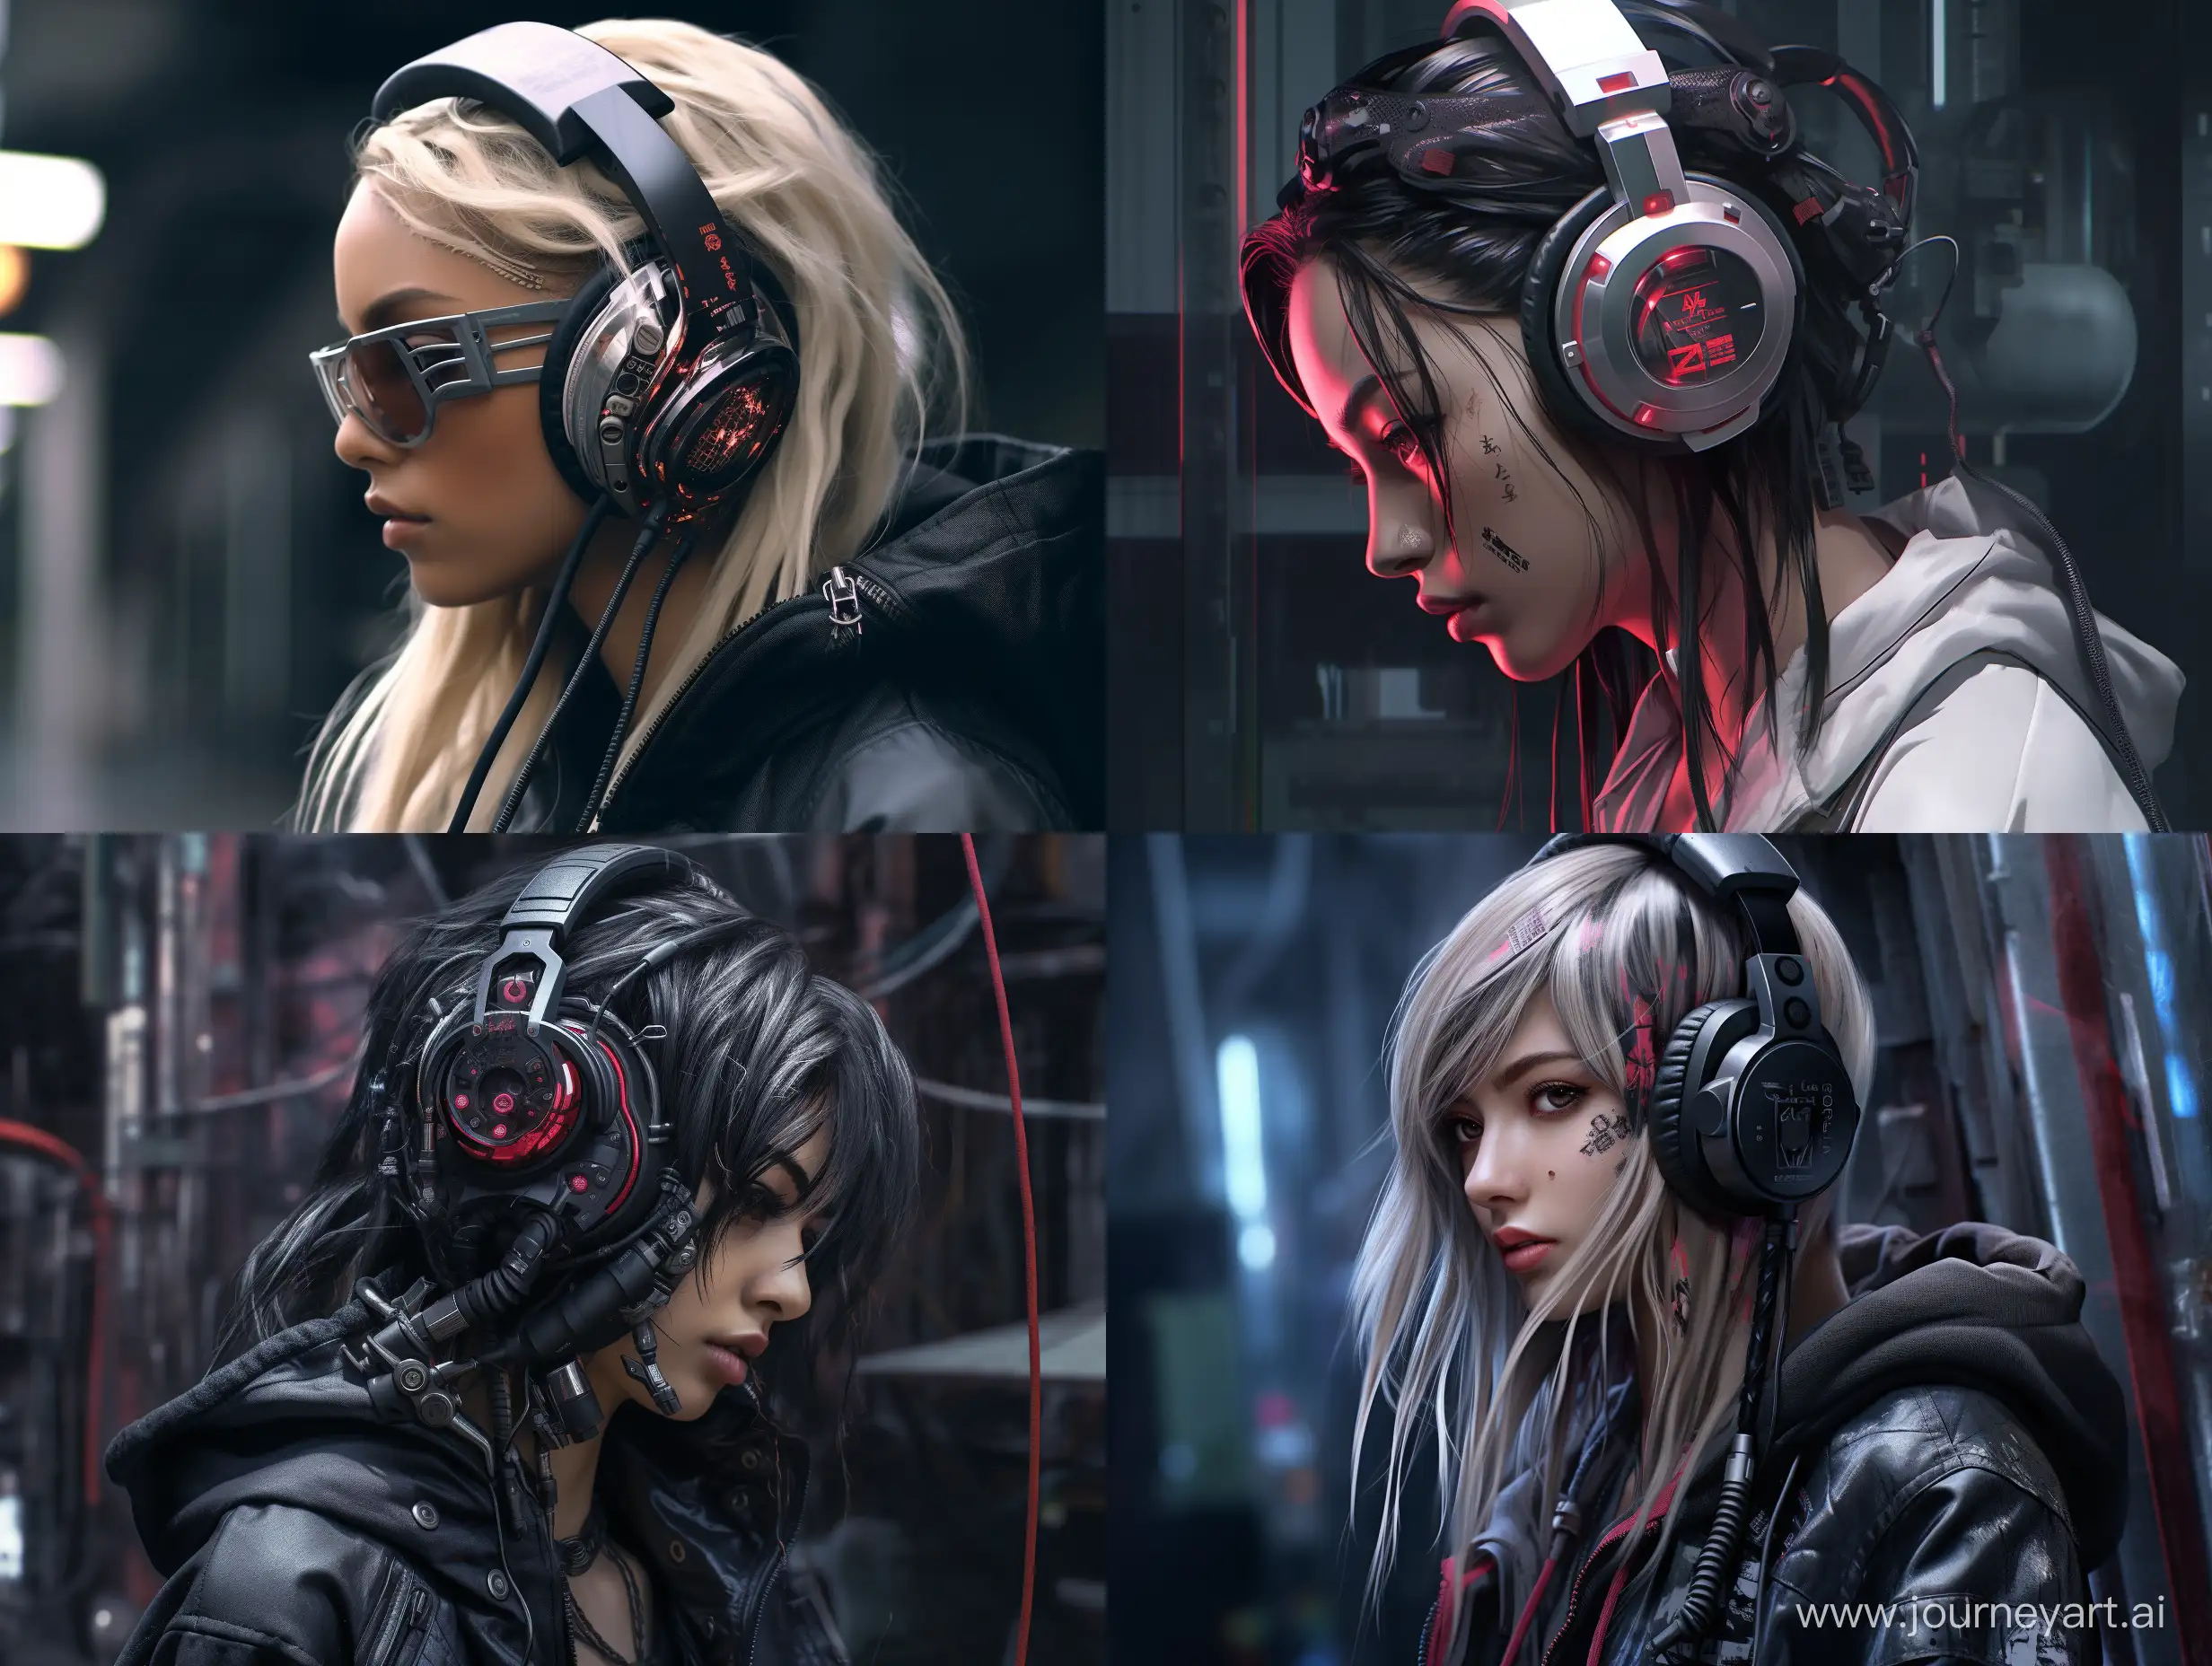 Futuristic-Cyberpunk-Headphones-in-Augmented-Reality-AR-43-Aspect-Ratio